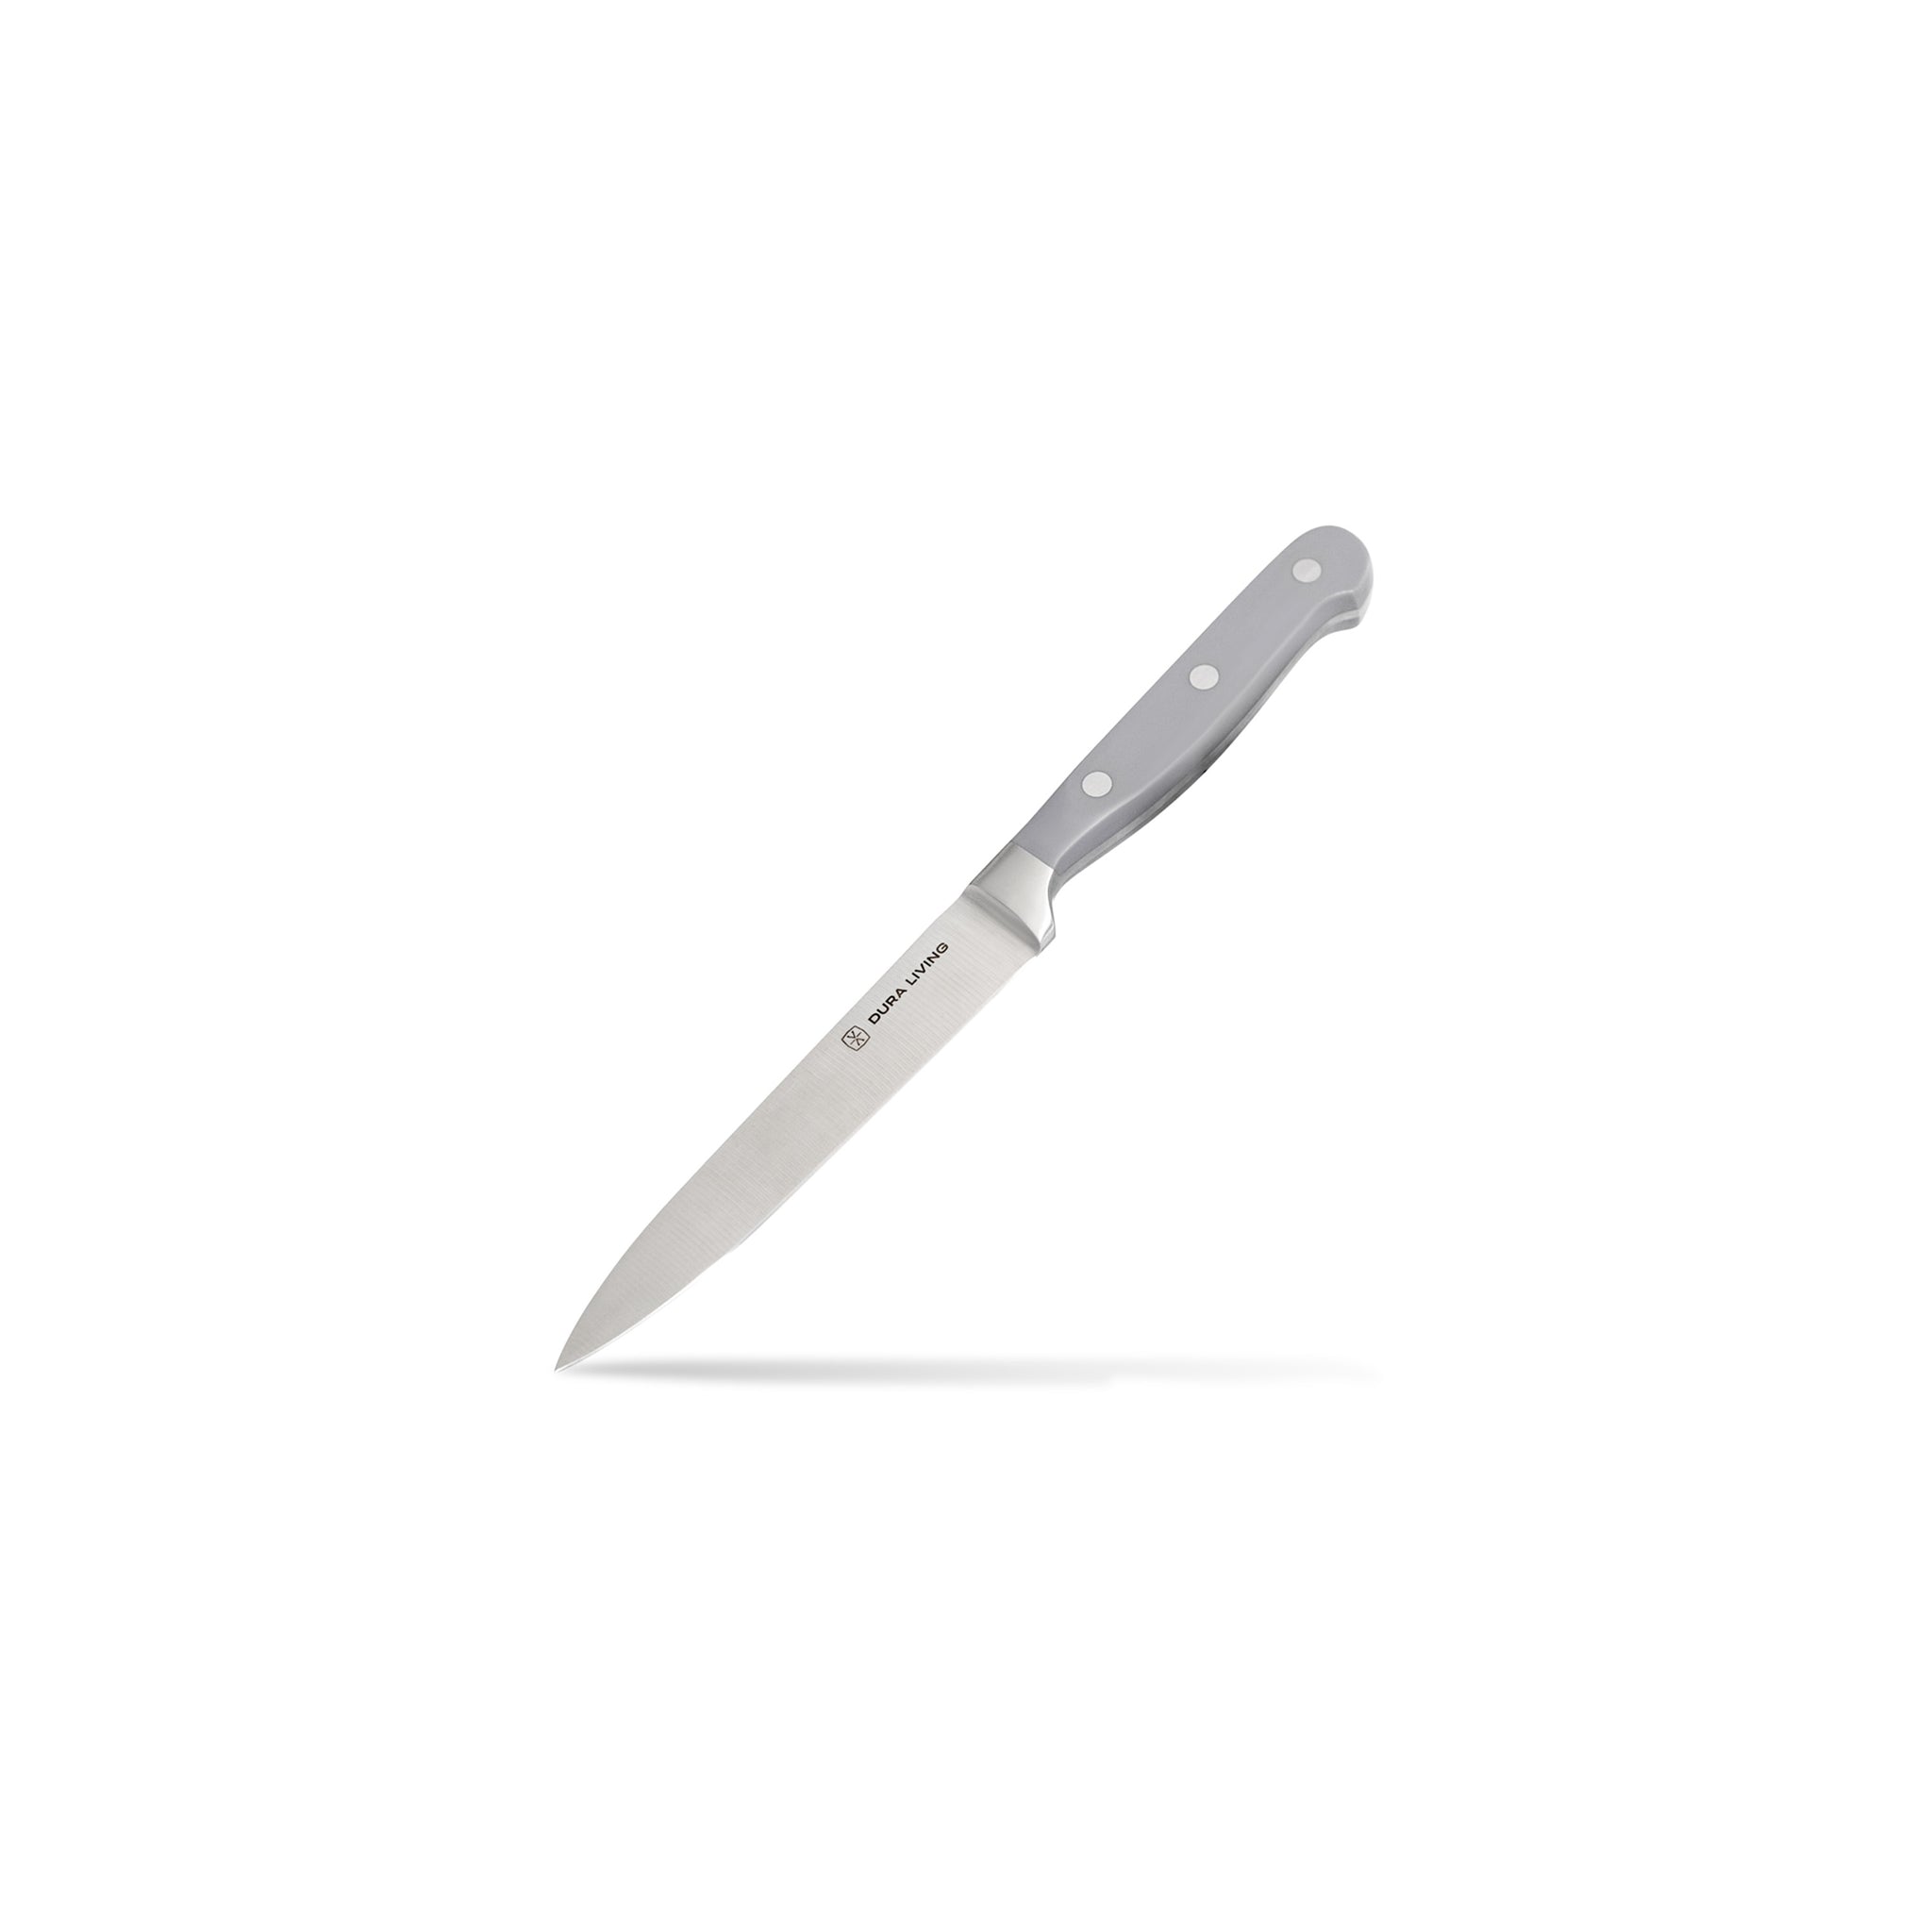 Superior 2-Piece Kitchen Knife Set - Gray